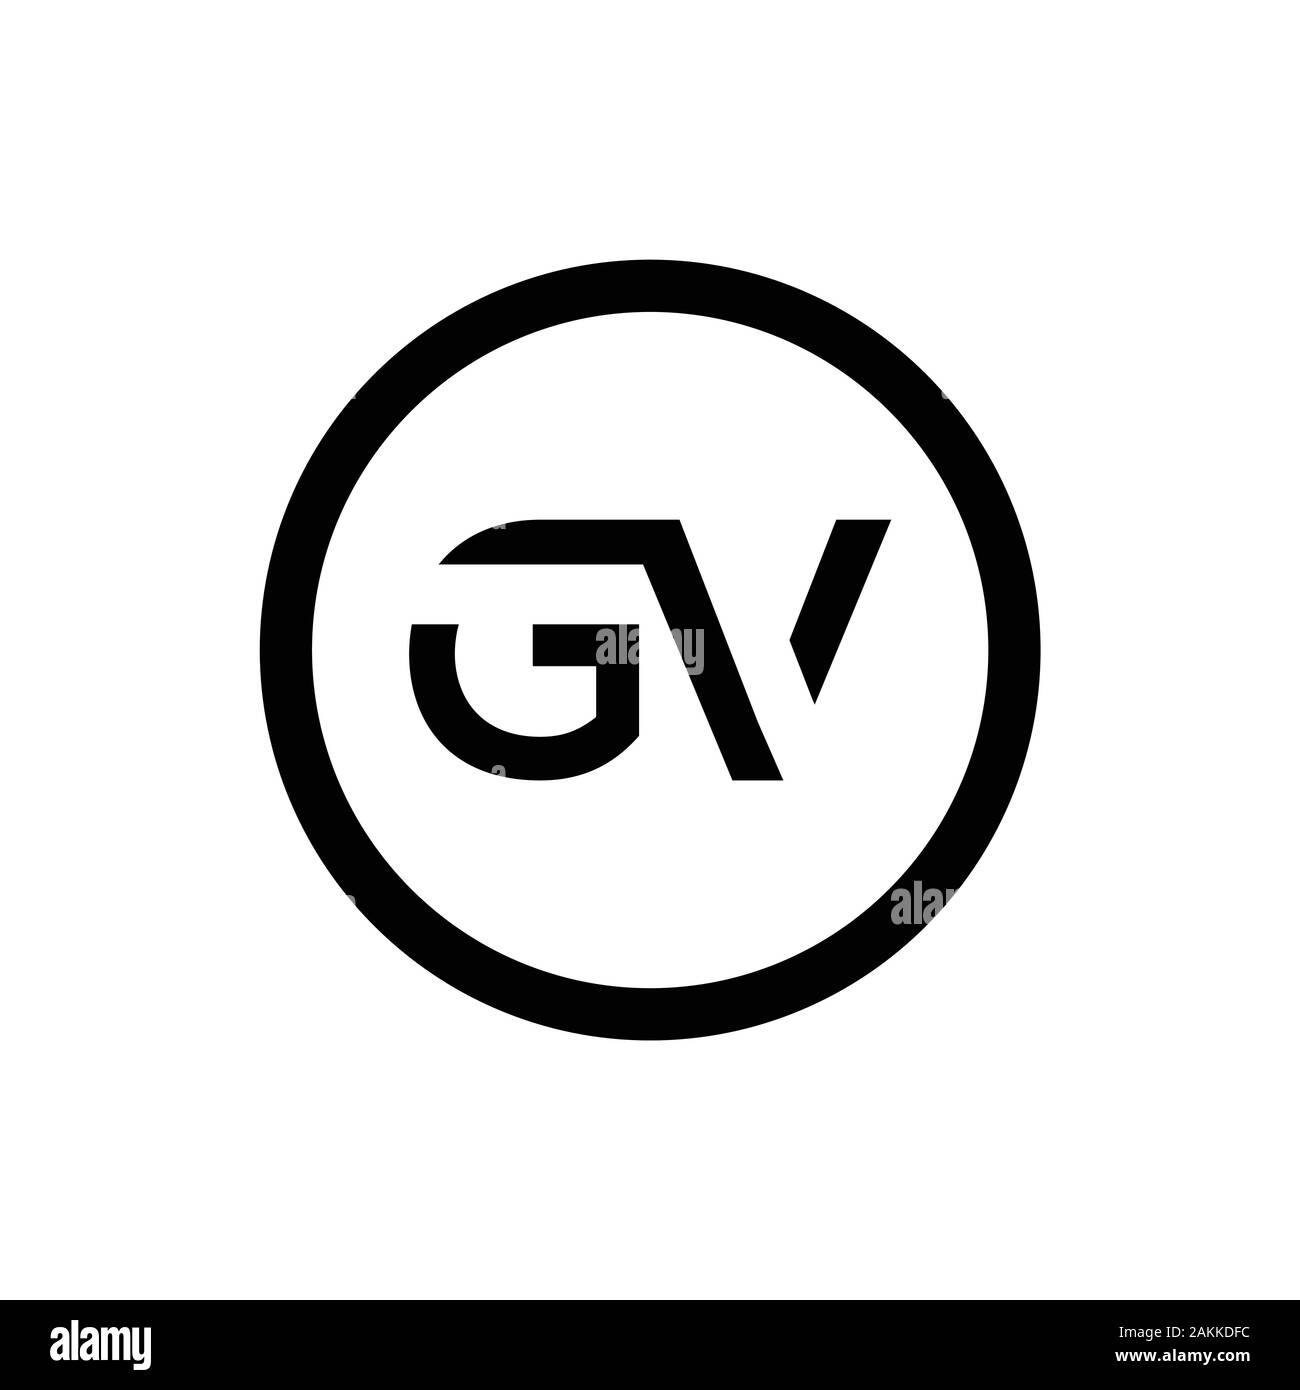 Letter GV logo design. GV logo with square shape in black colors vector ...